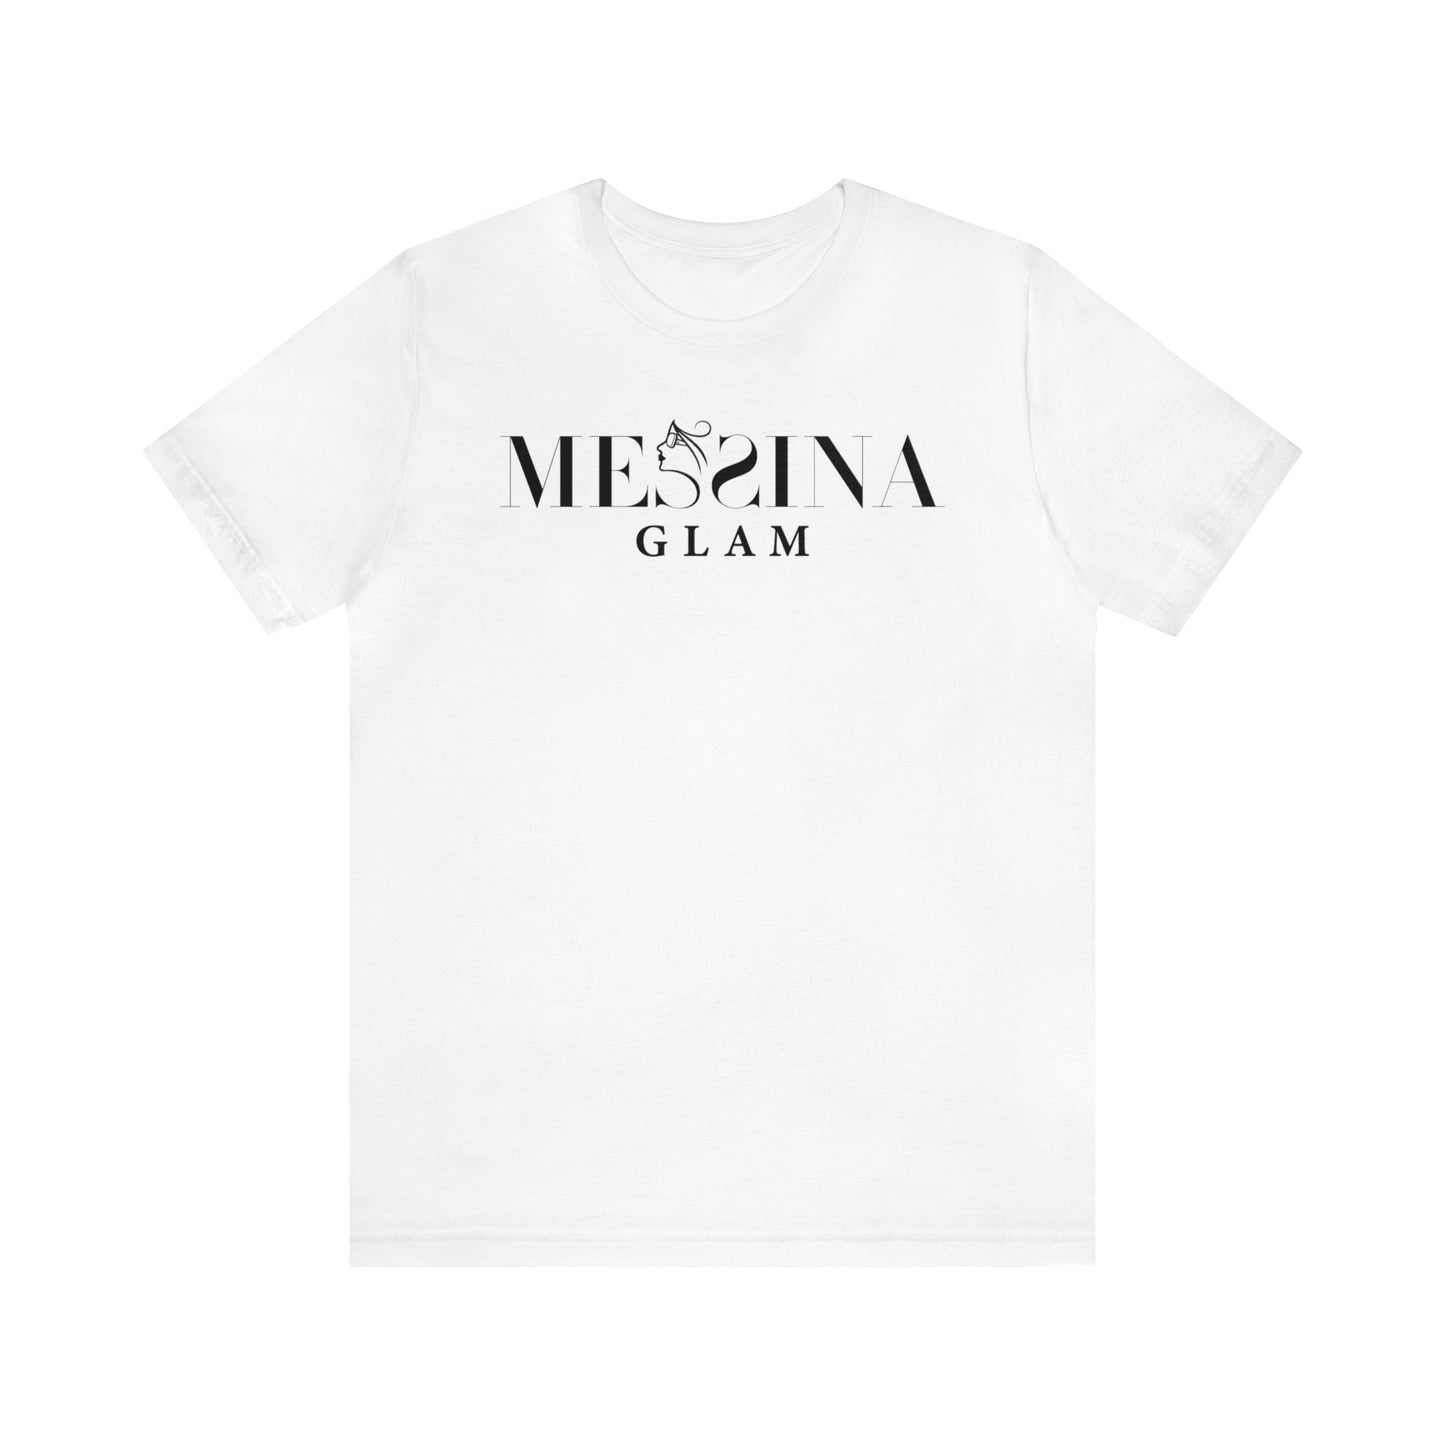 Messina Glam Unisex Jersey Short Sleeve Tee